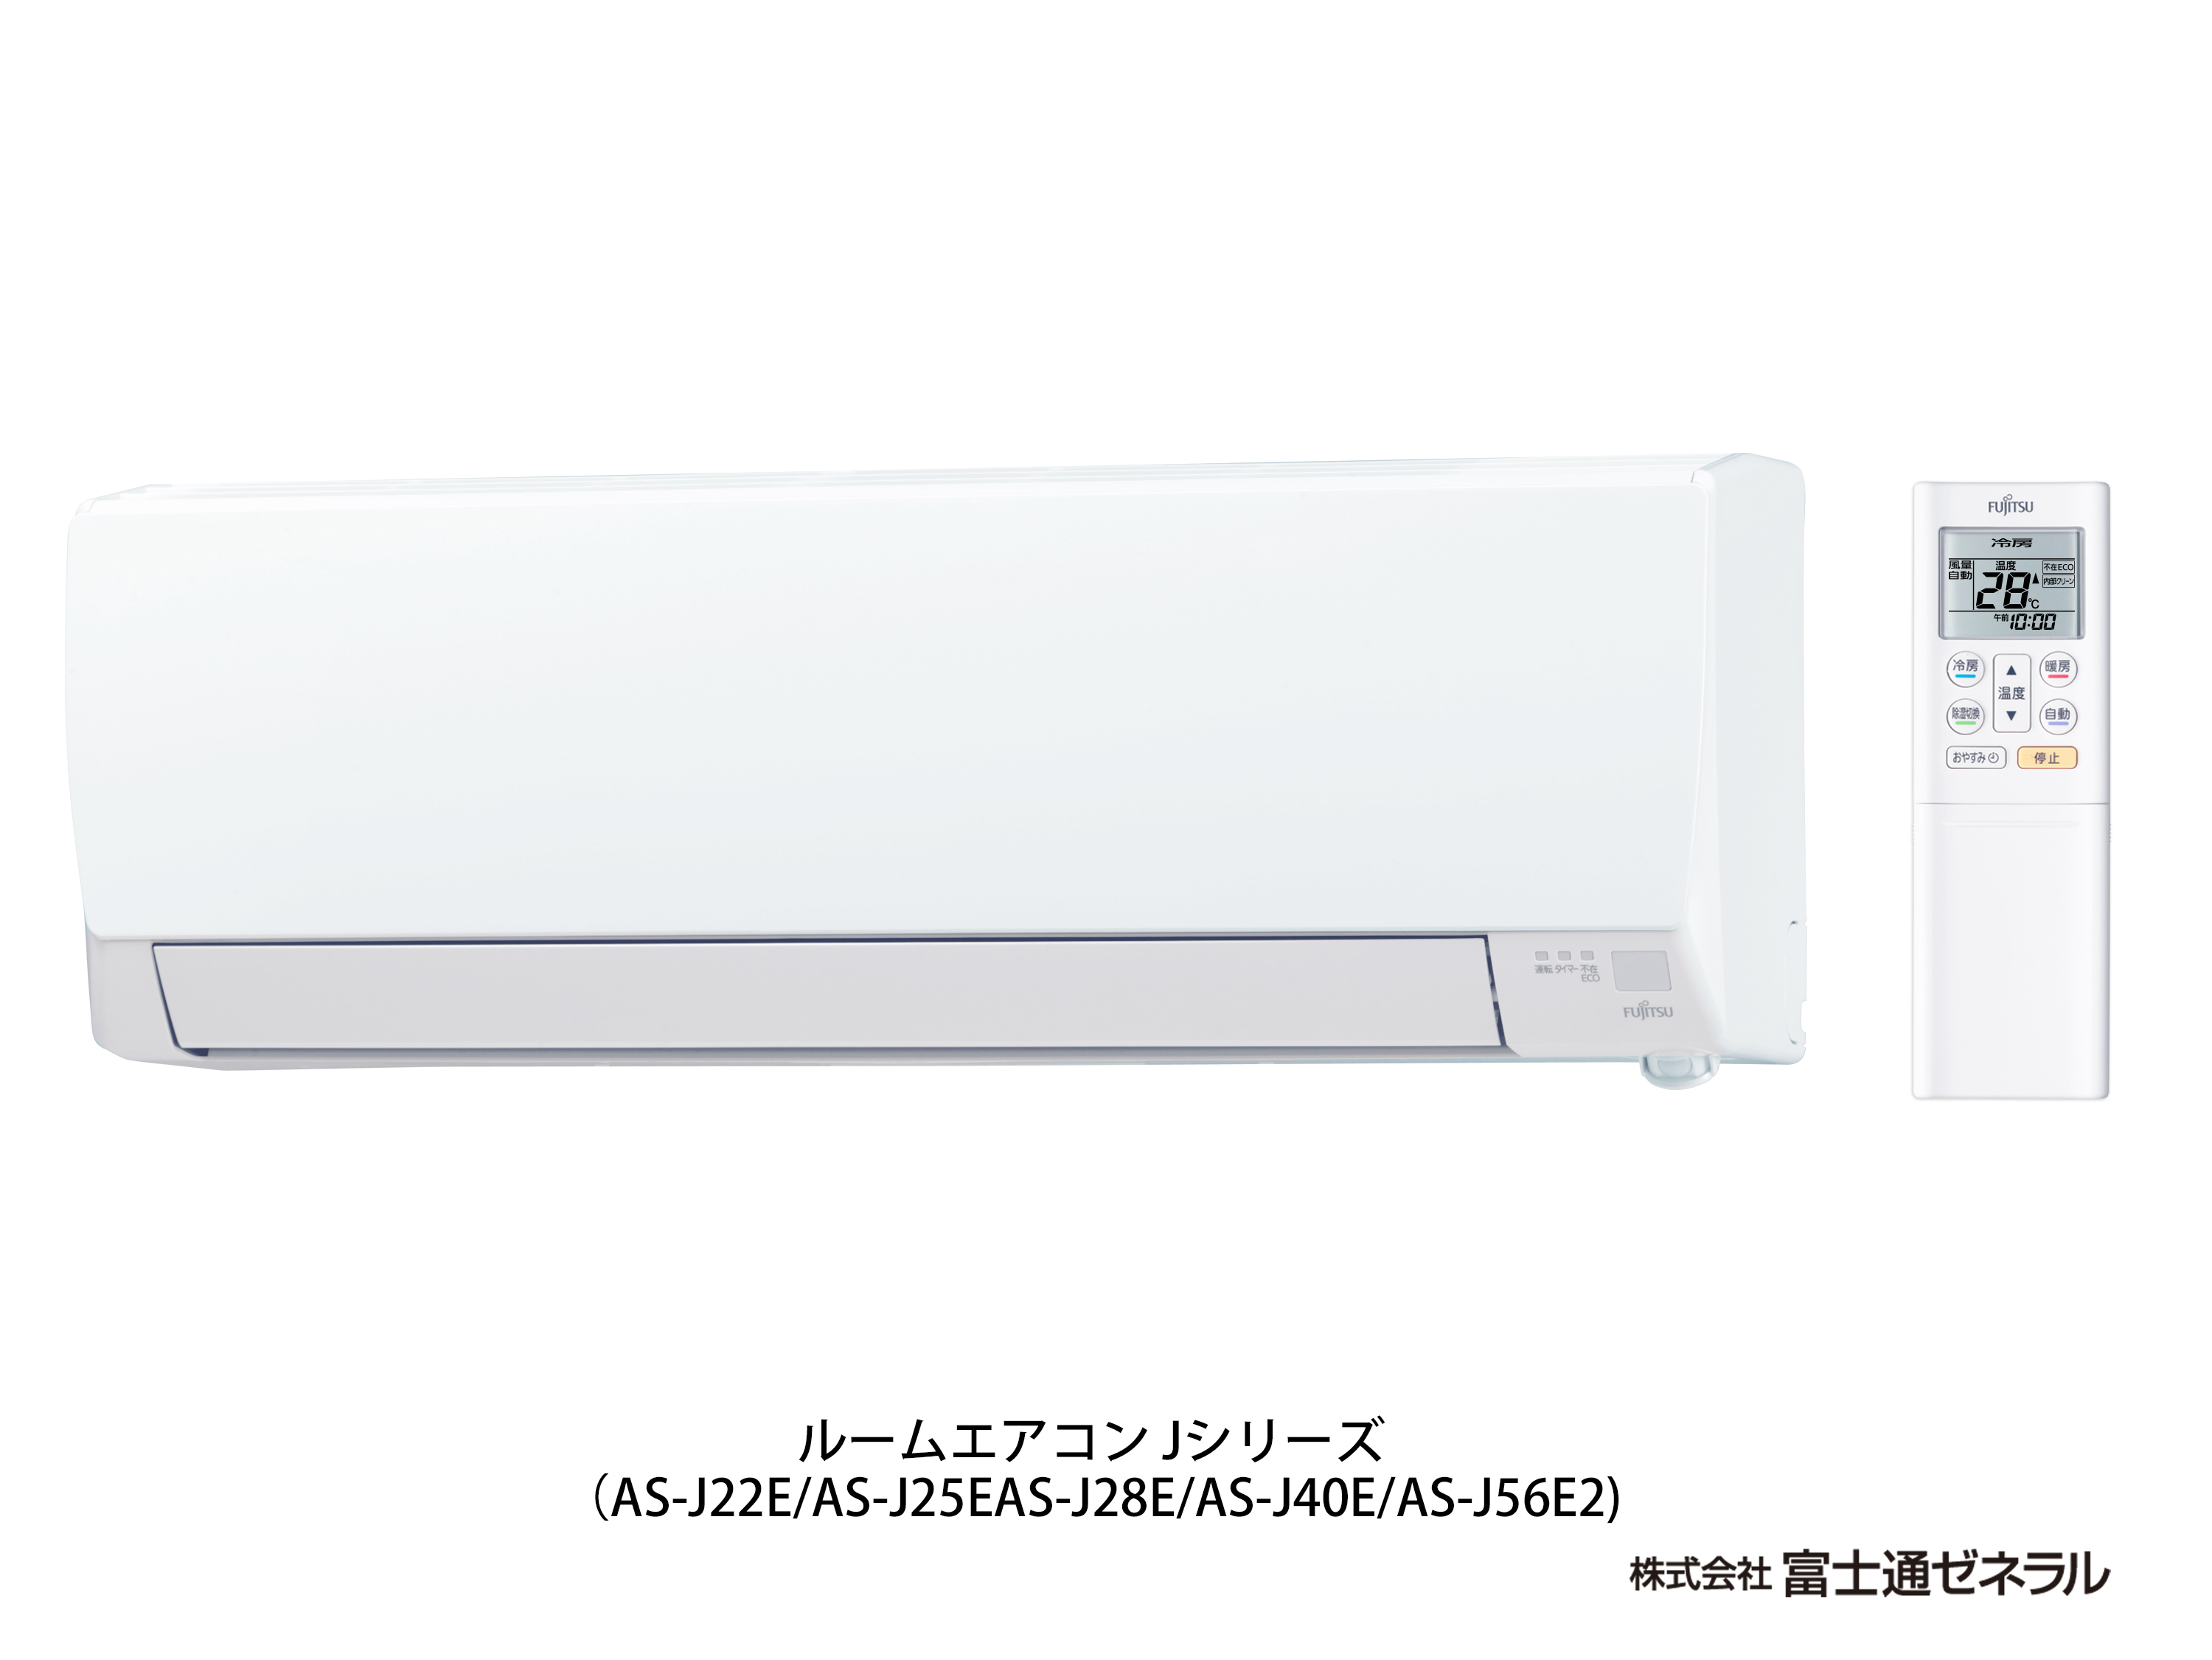 AS-J22E 概要 2015年 エアコン J シリーズ - 富士通ゼネラル JP